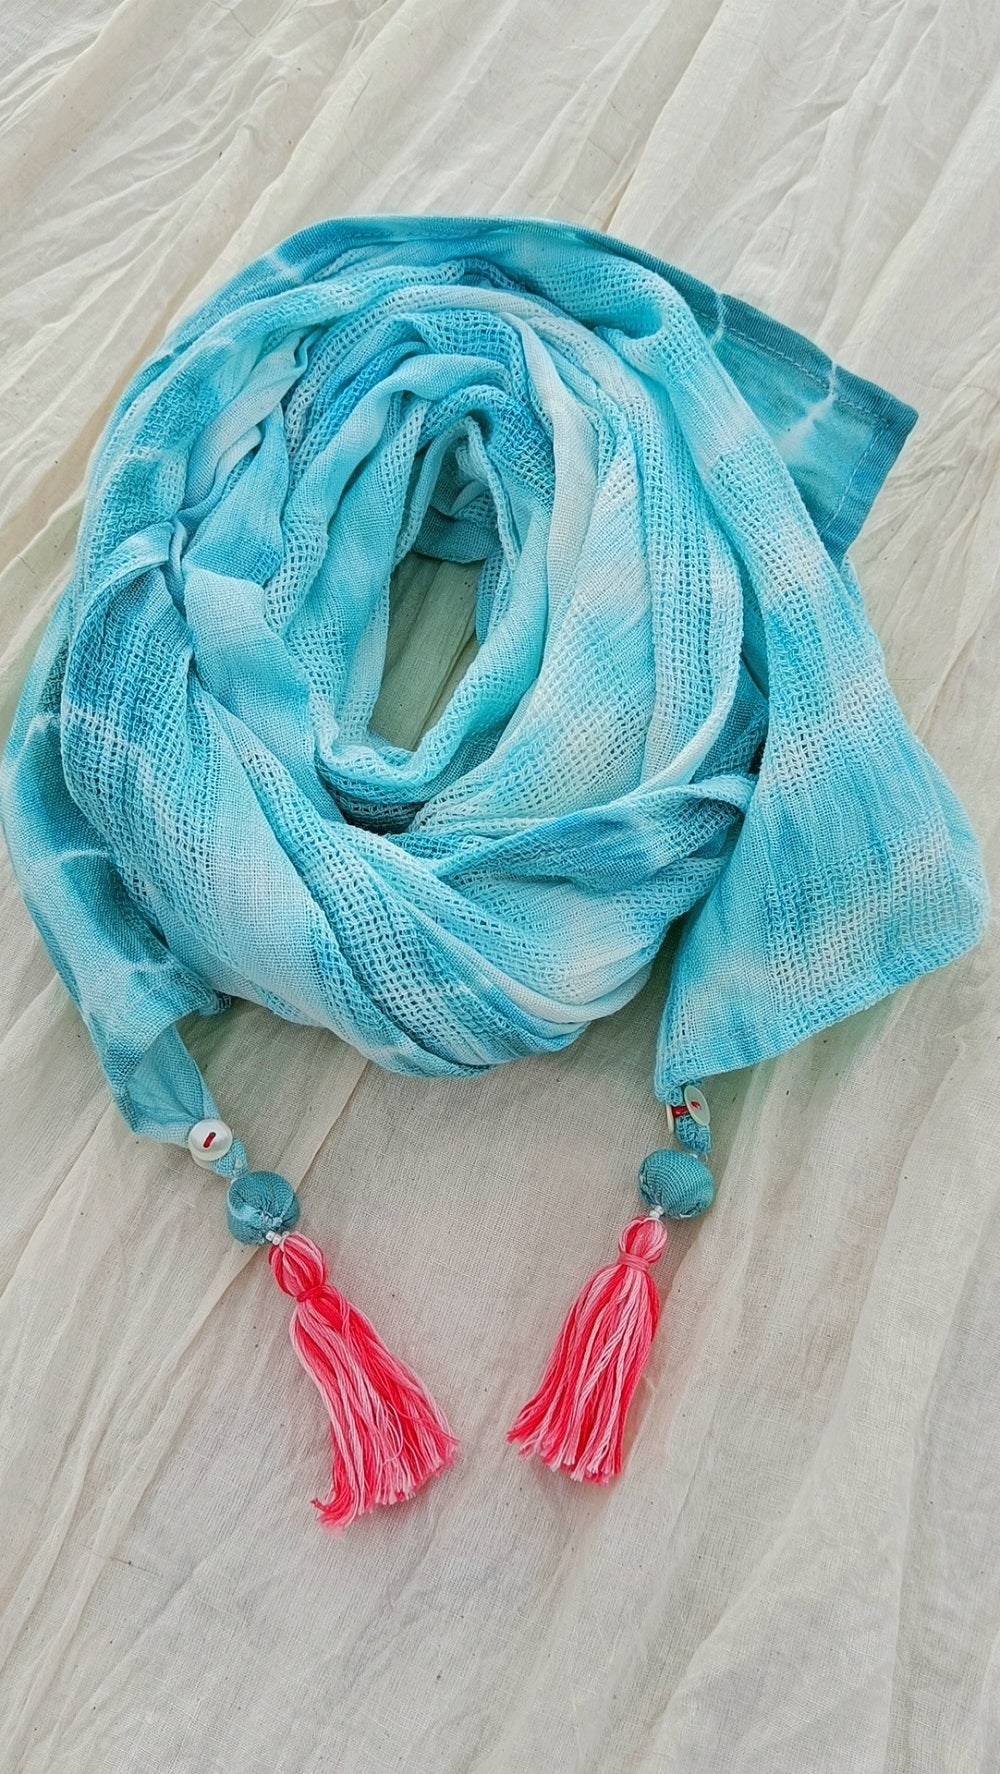 Blue tie&dye pure cotton scarves and stoles online at bebaakstudio.com